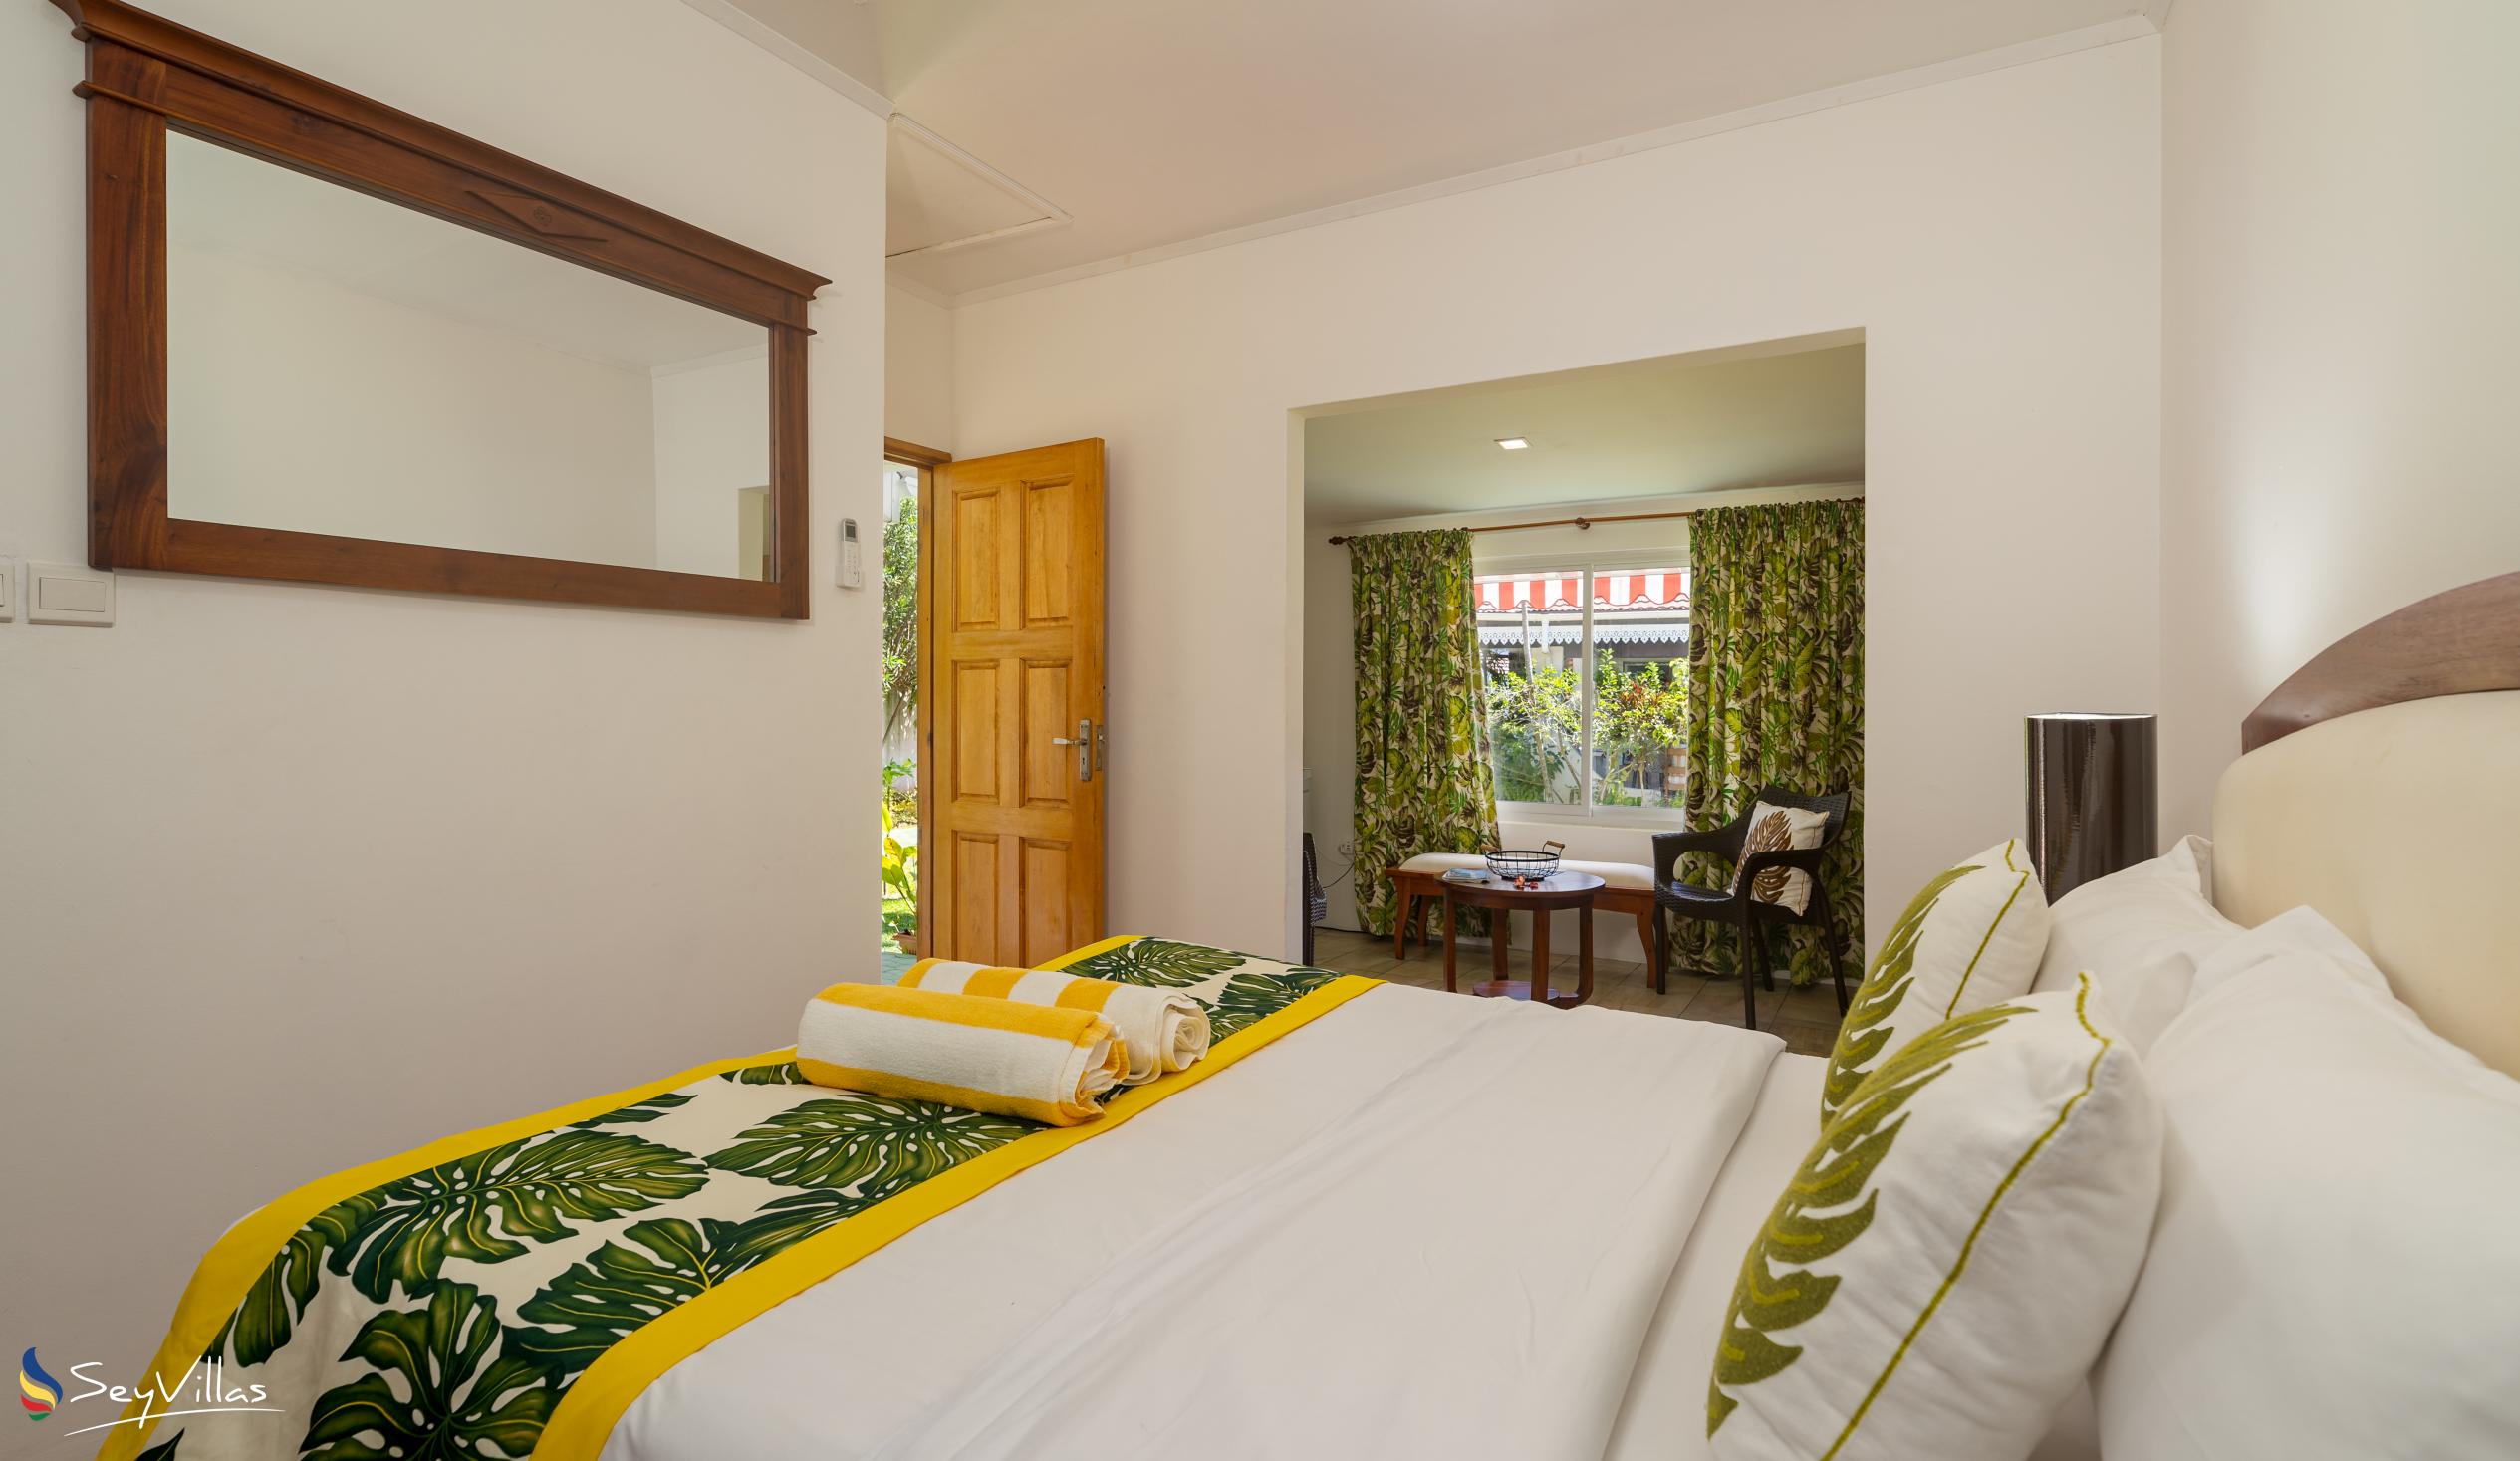 Photo 95: Villa Caballero - Standard Room - Mahé (Seychelles)